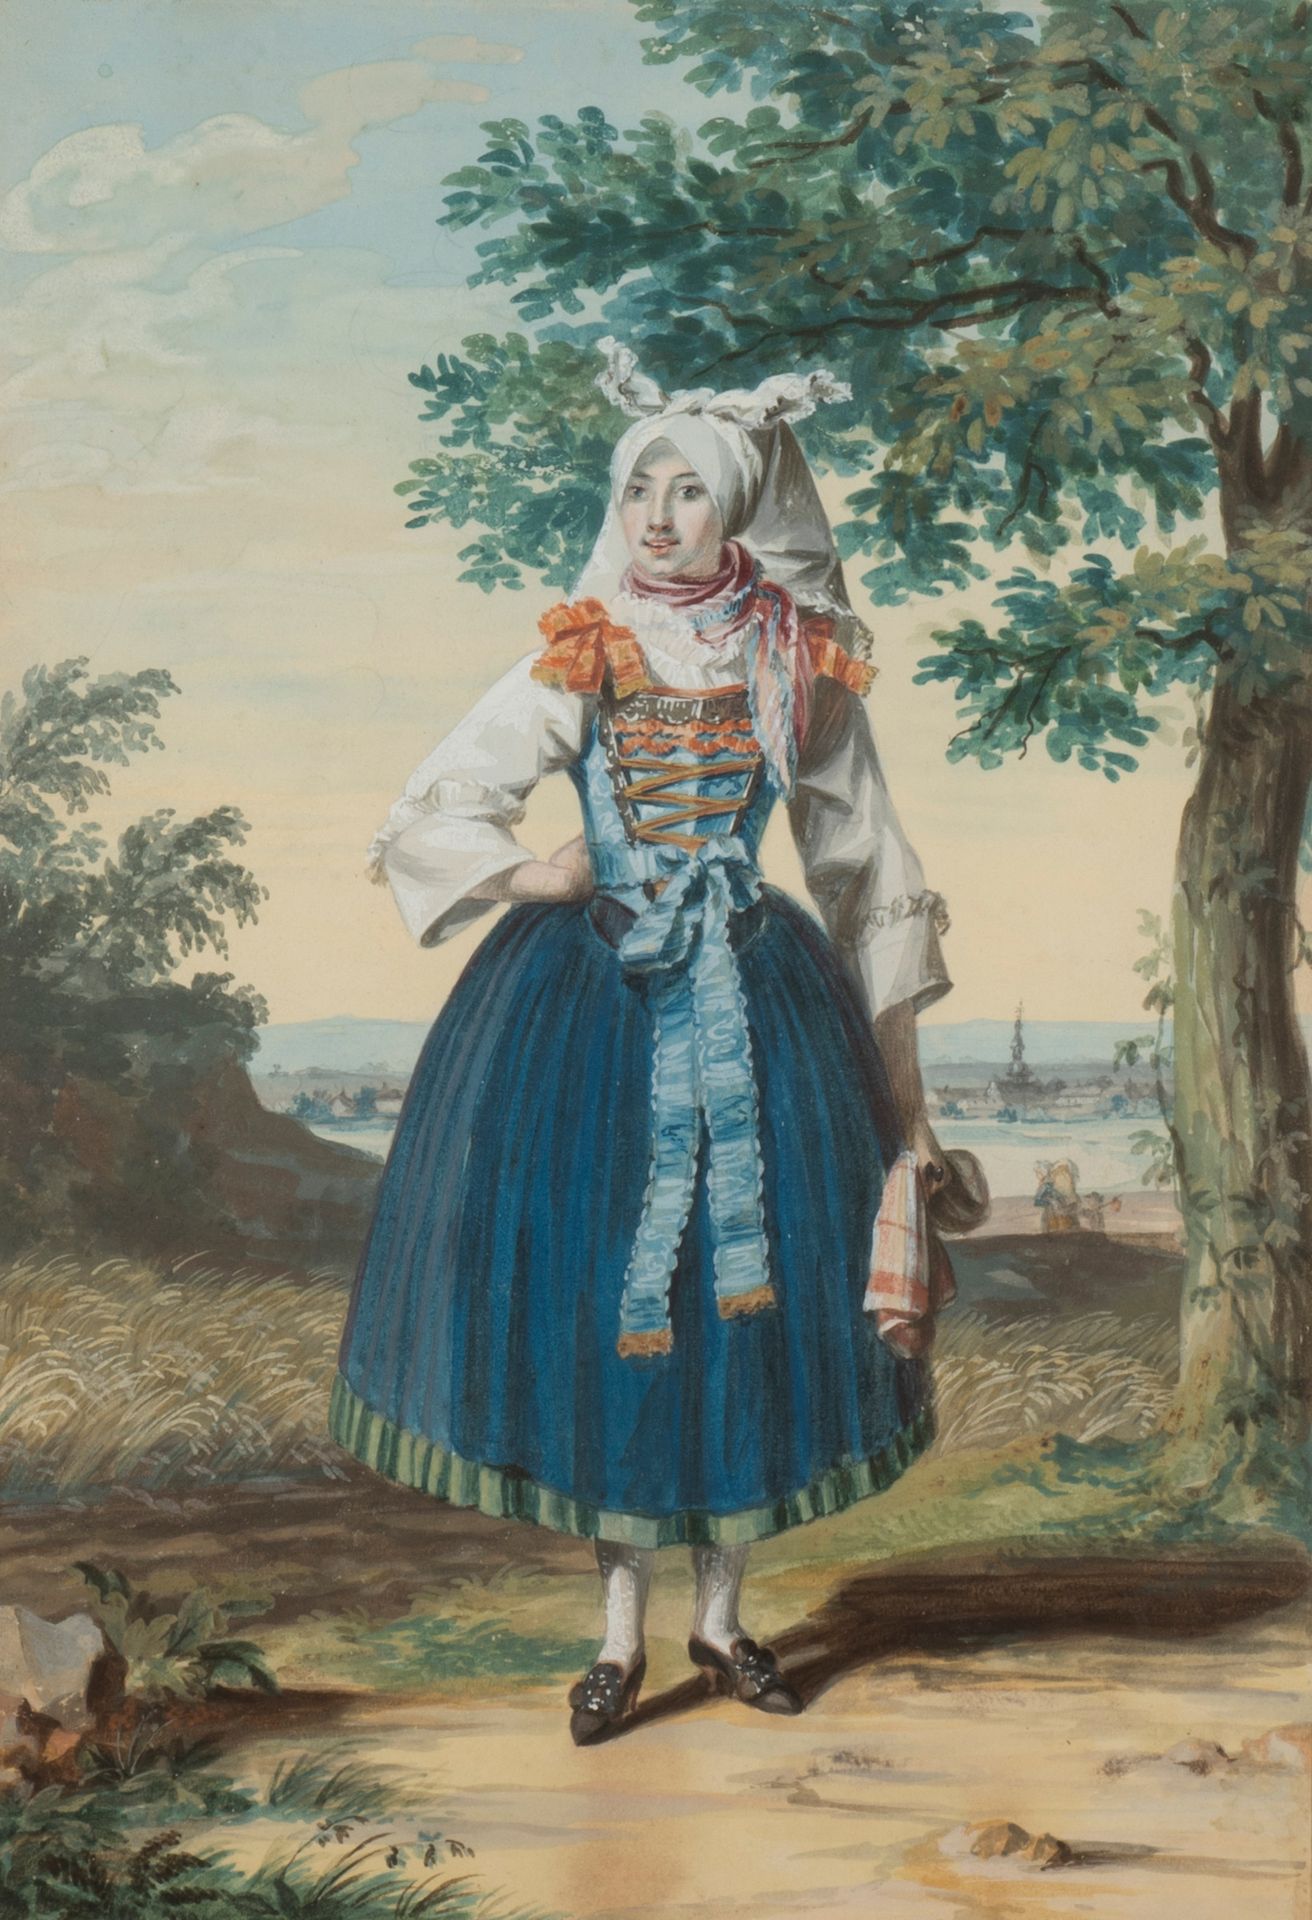 Ecole du XIXème siècle 穿着服装的女人
纸上水彩画。
带框。
26 x 19 cm